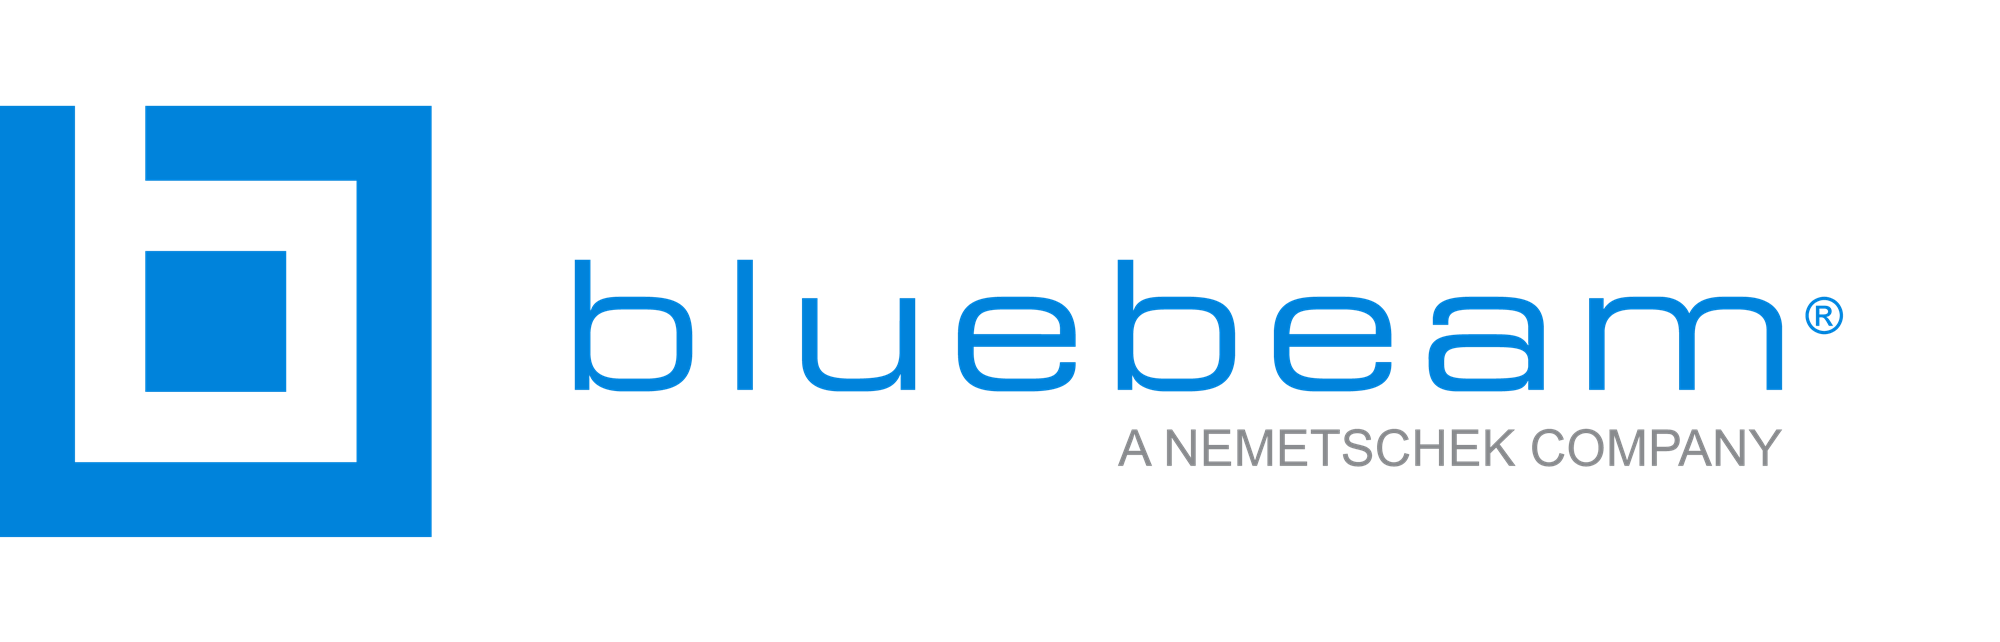 IMGBIN_bluebeam-software-png_29vvxVvS